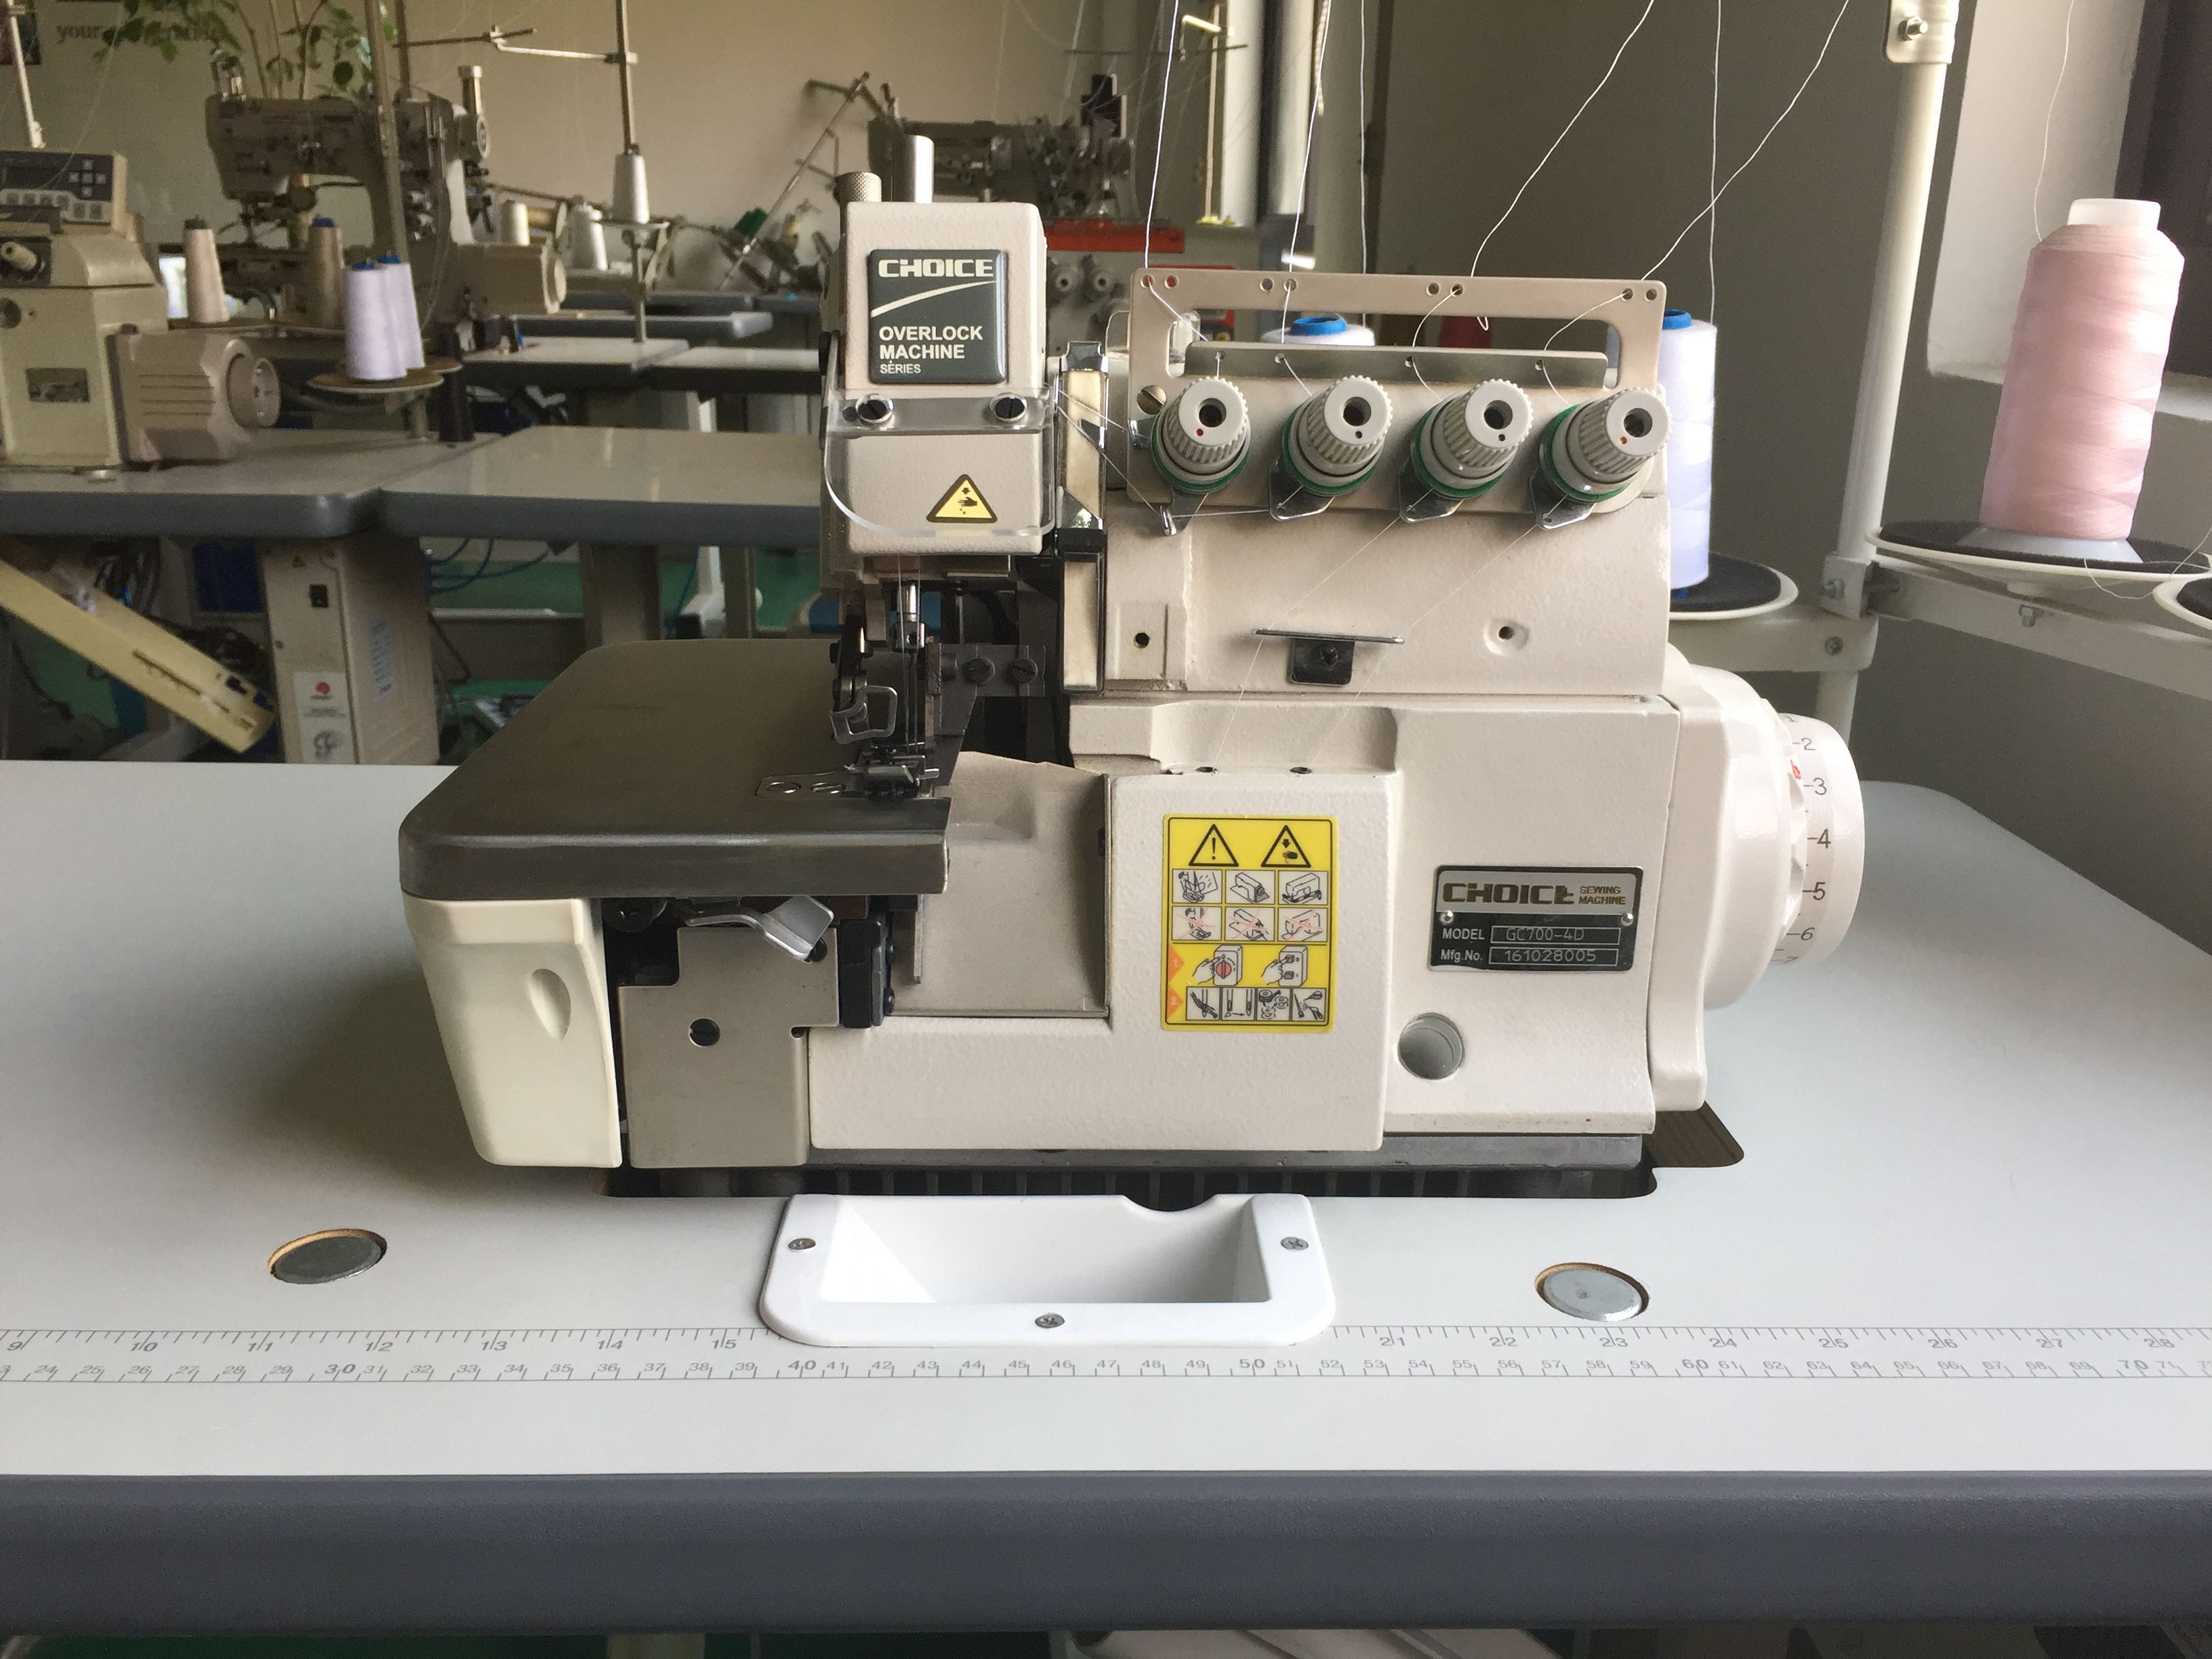 Compressor Flat Lock Jack Sewing Machine at Rs 78000